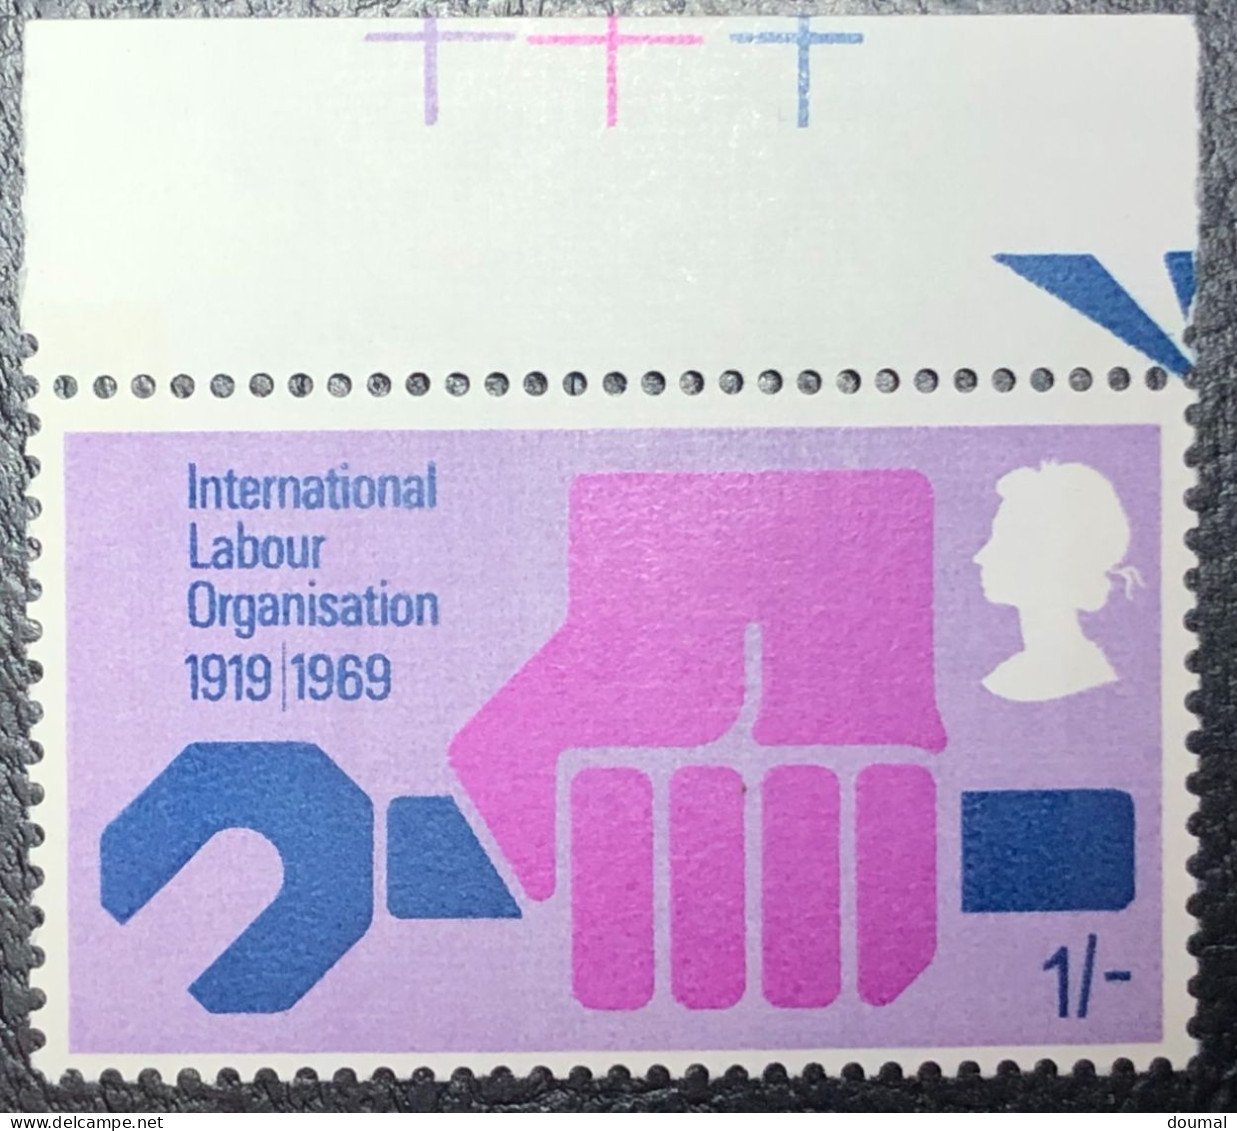 Organisation Internationale Du Travail 1969 1/- Timbre Unique - Unused Stamps